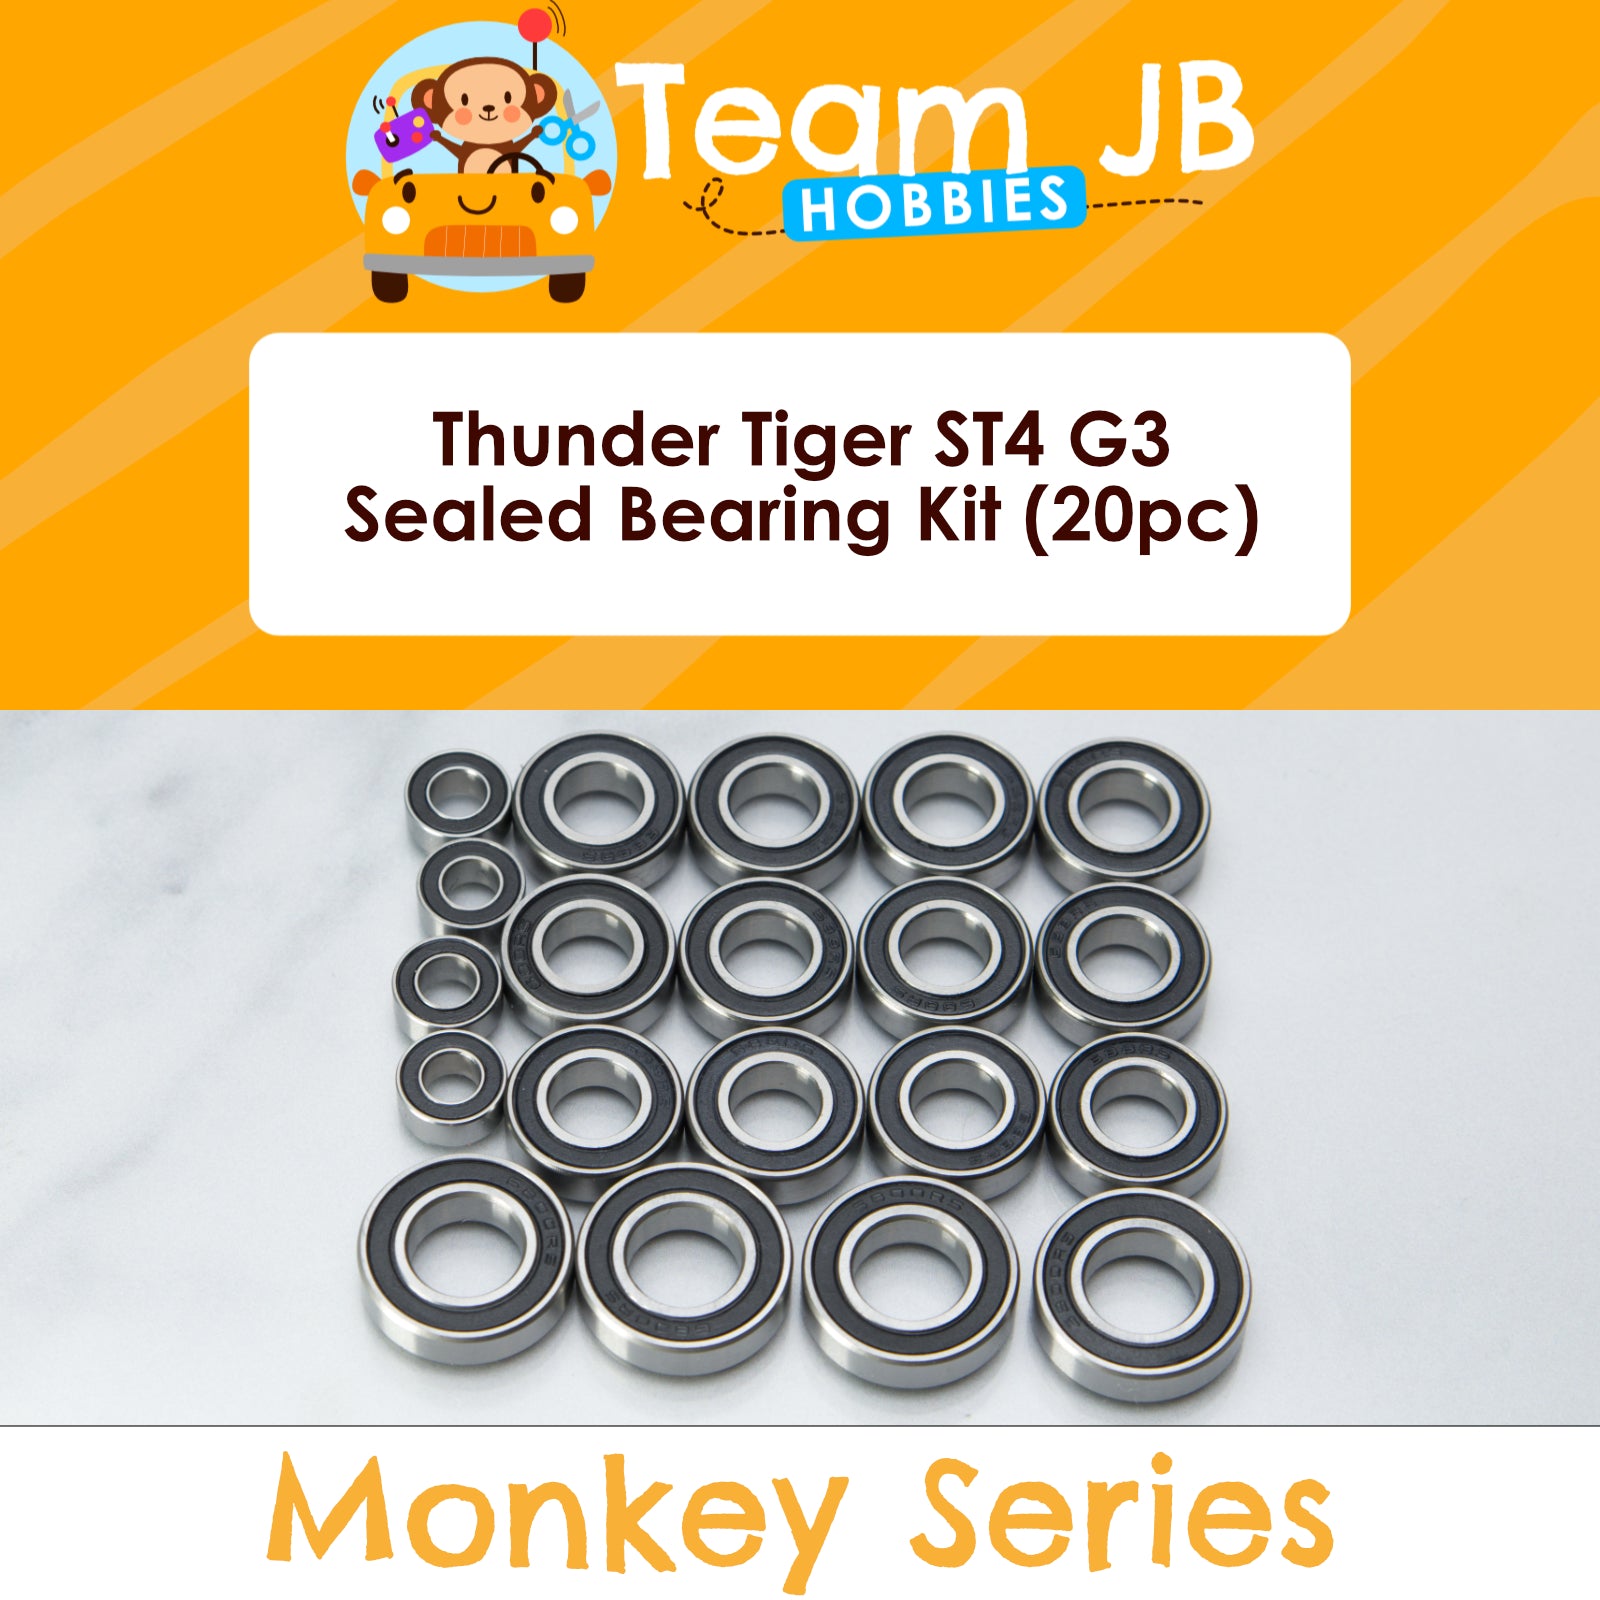 Thunder Tiger ST4 G3 - Sealed Bearing Kit